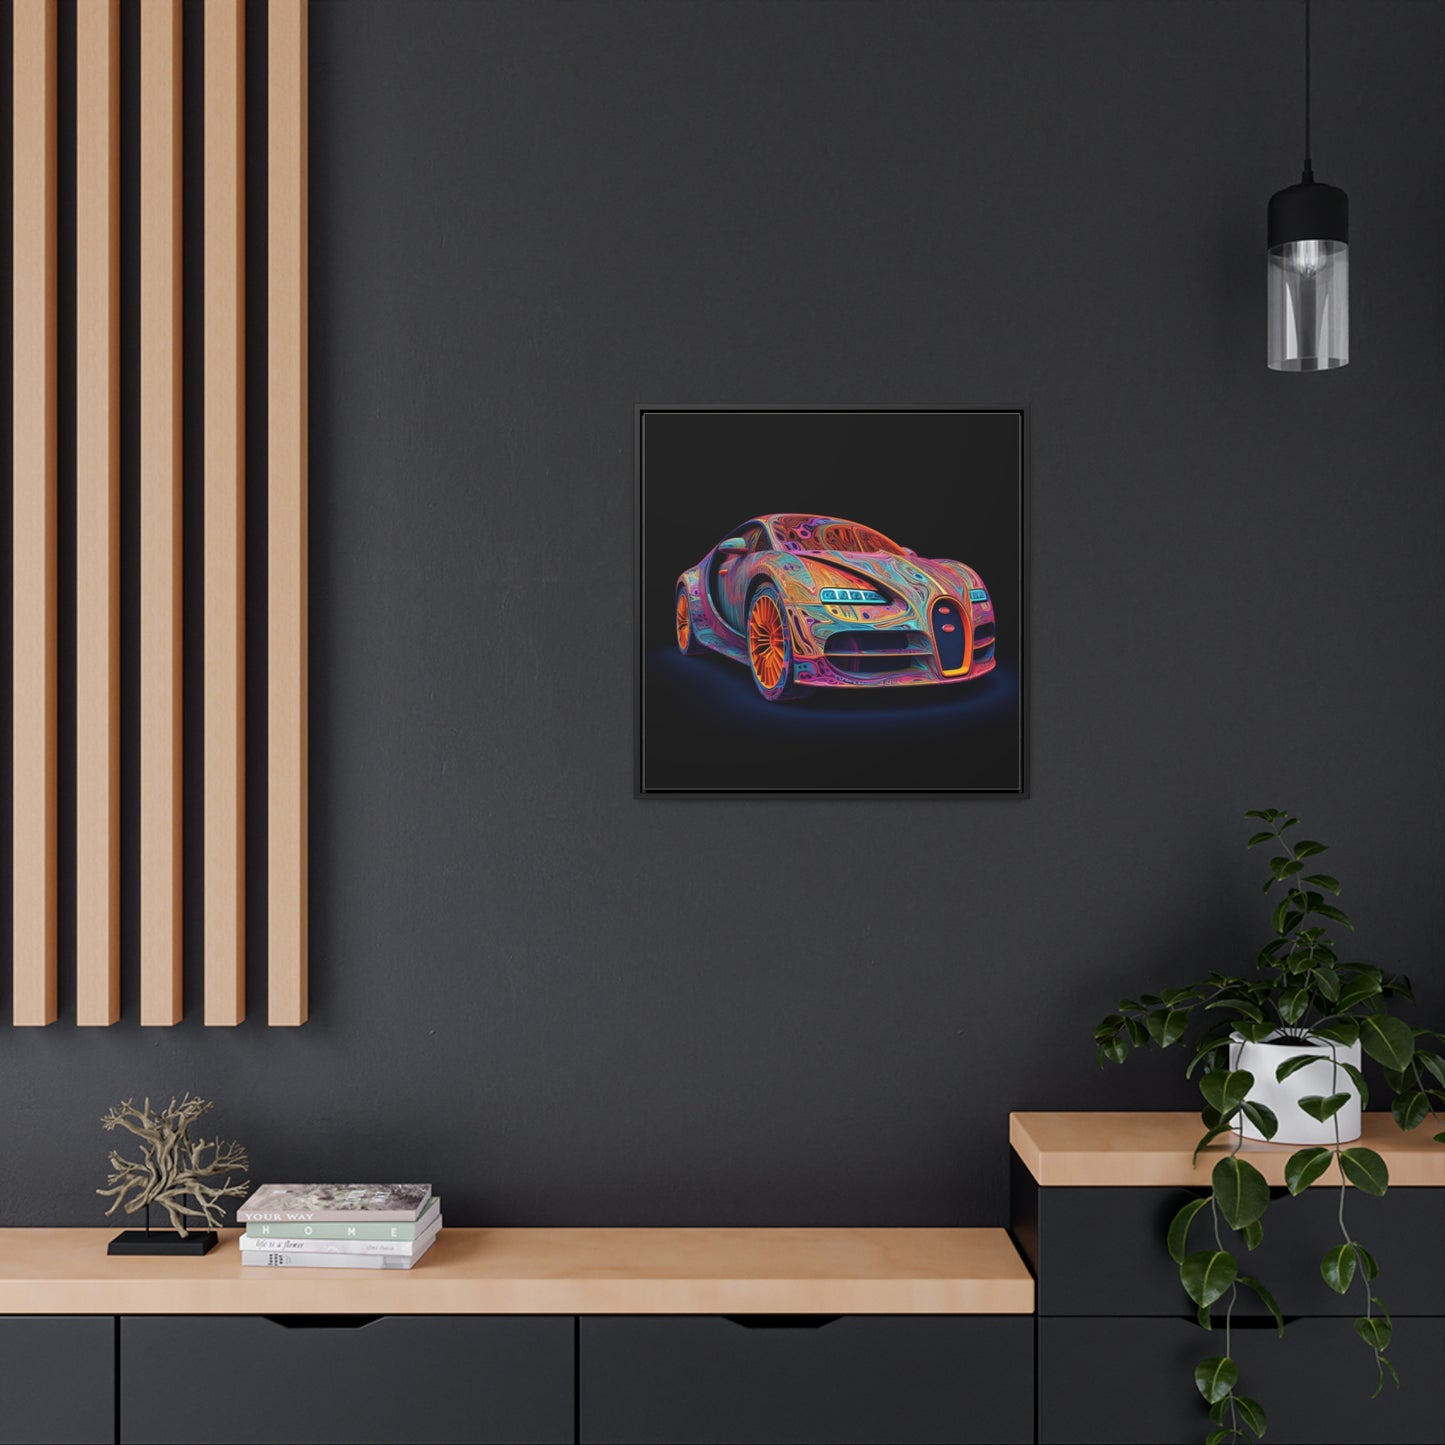 Gallery Canvas Wraps, Square Frame Bugatti Abstract Concept 1